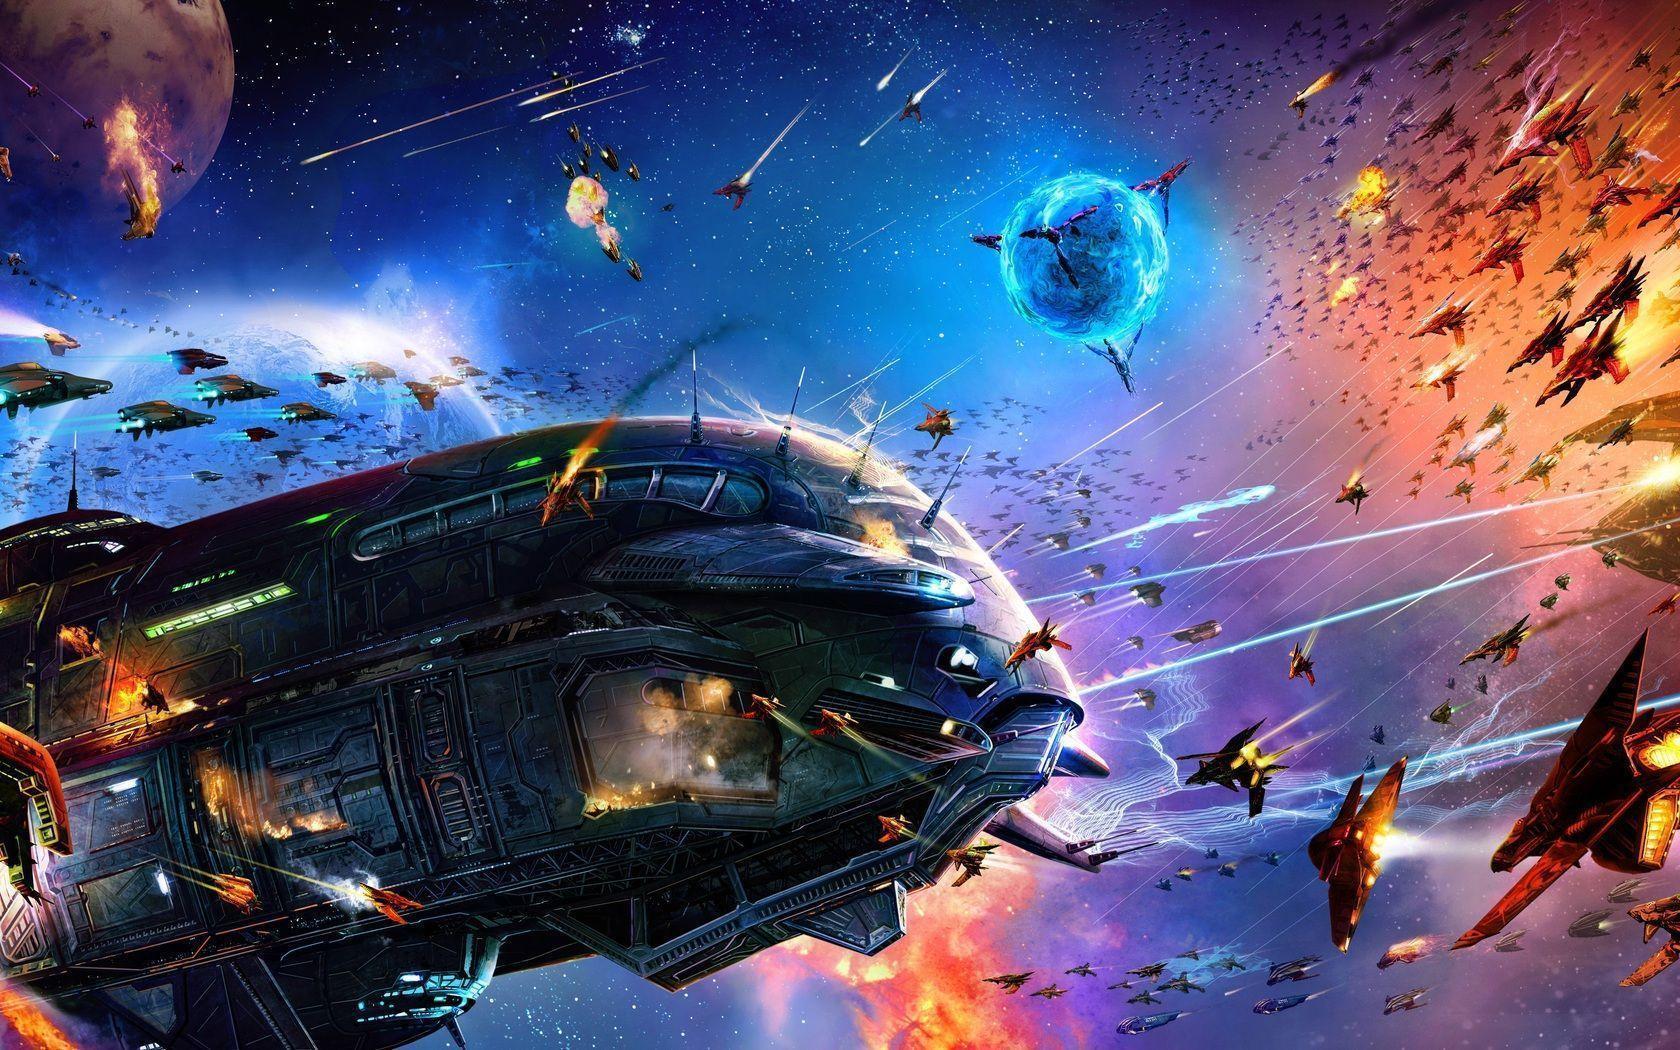 Sci Fi Spaceship Wallpaper 1680x1050 px Free Download